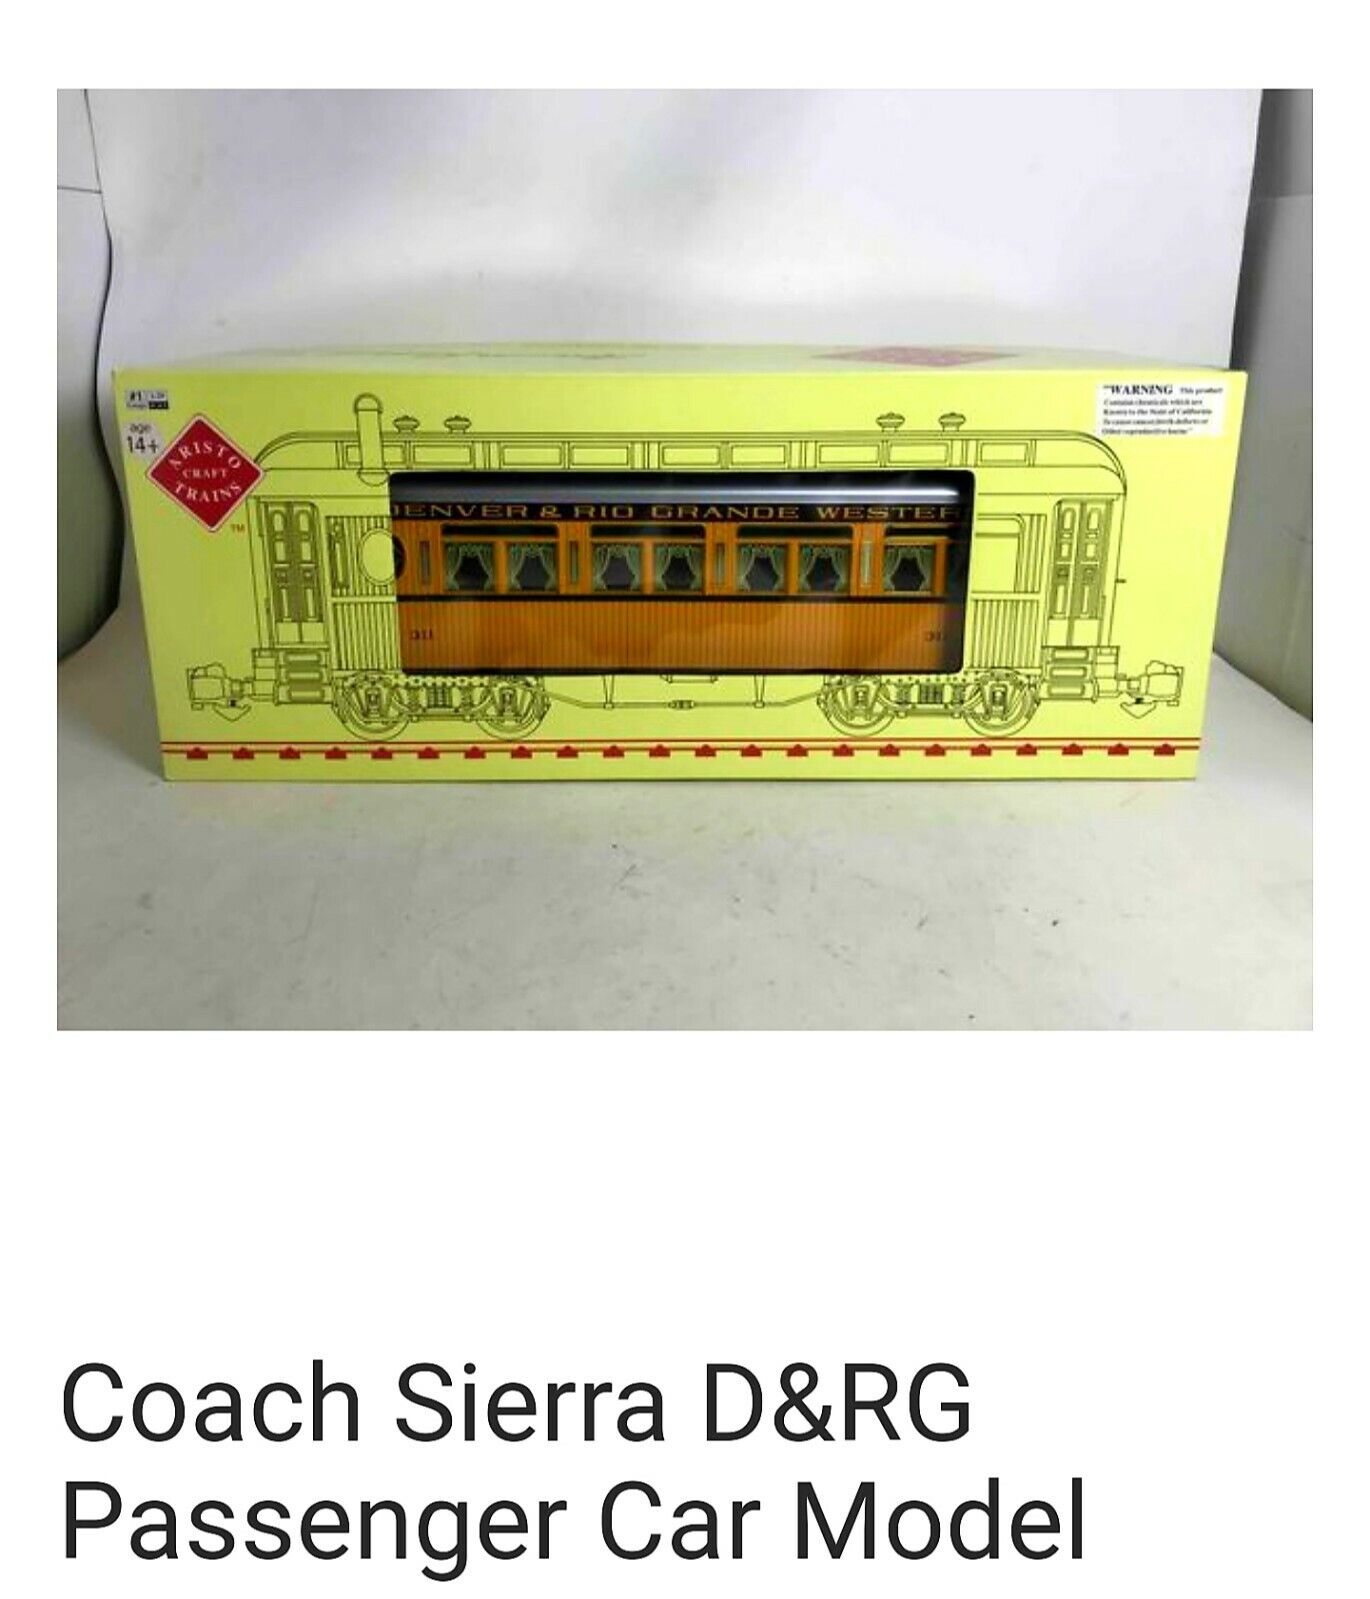 Coach Sierra D&RG Passenger Car Model. Aristo Craft Trains